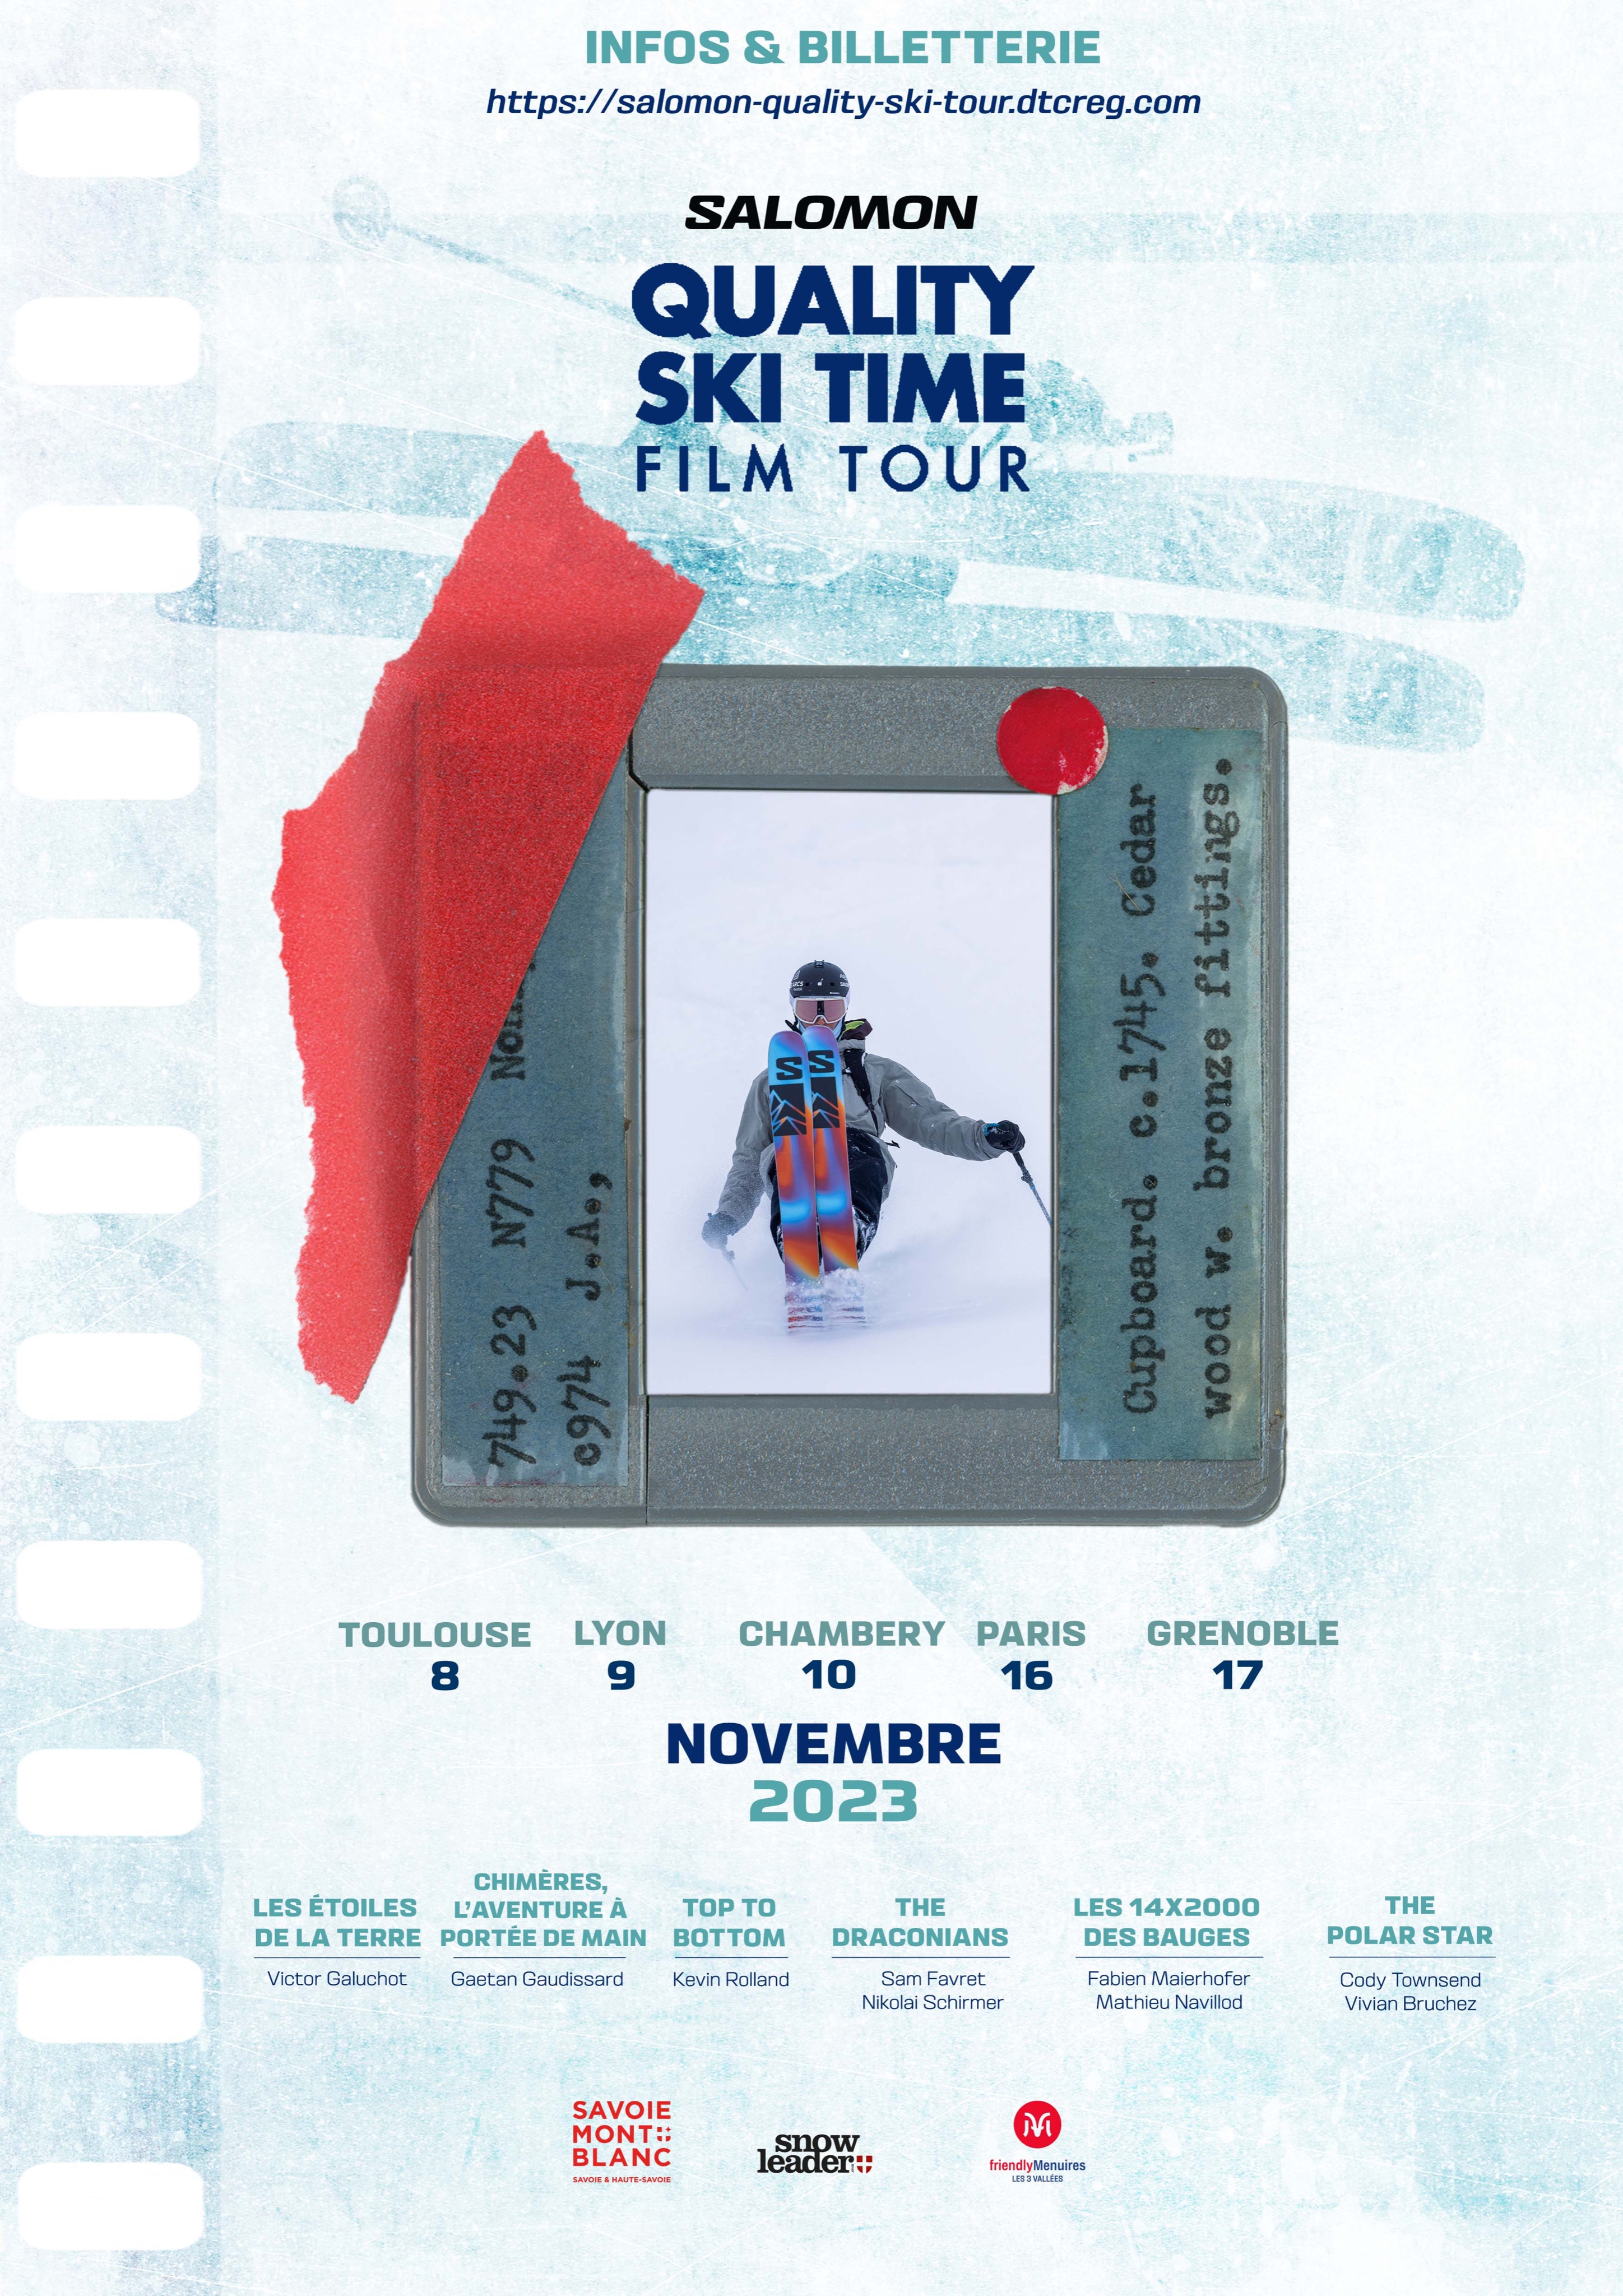 Salomon on X: "Catch now a screening near you on our European Quality Ski  Time Tour. Toulouse, France • Nov 08 Lyon, France • Nov 09 Chambéry, France  • Nov 10 Paris,